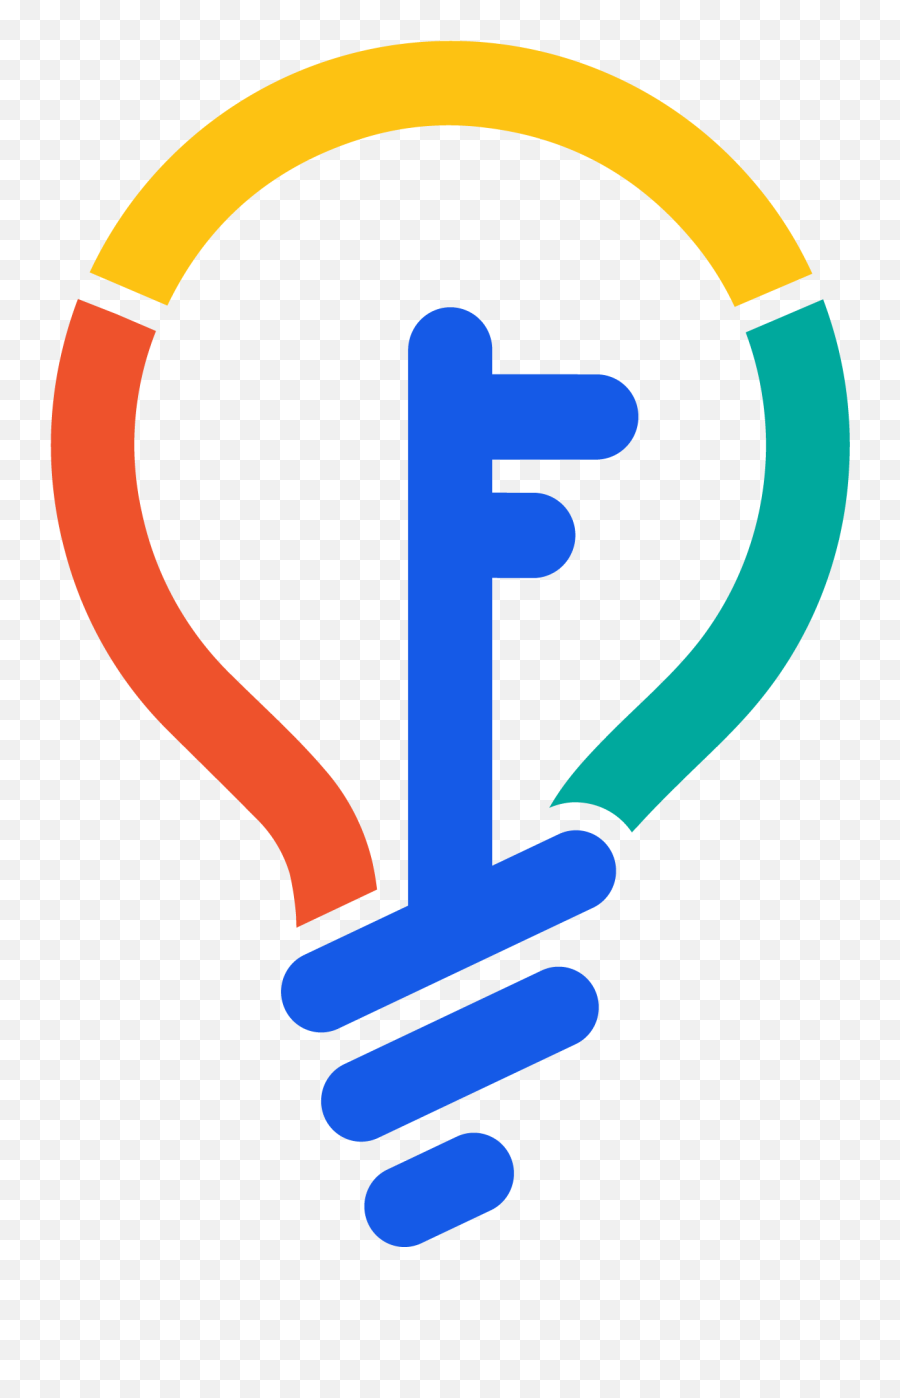 Filebulb And Key Logopng - Wikipedia Bulb And Key,Bulb Png